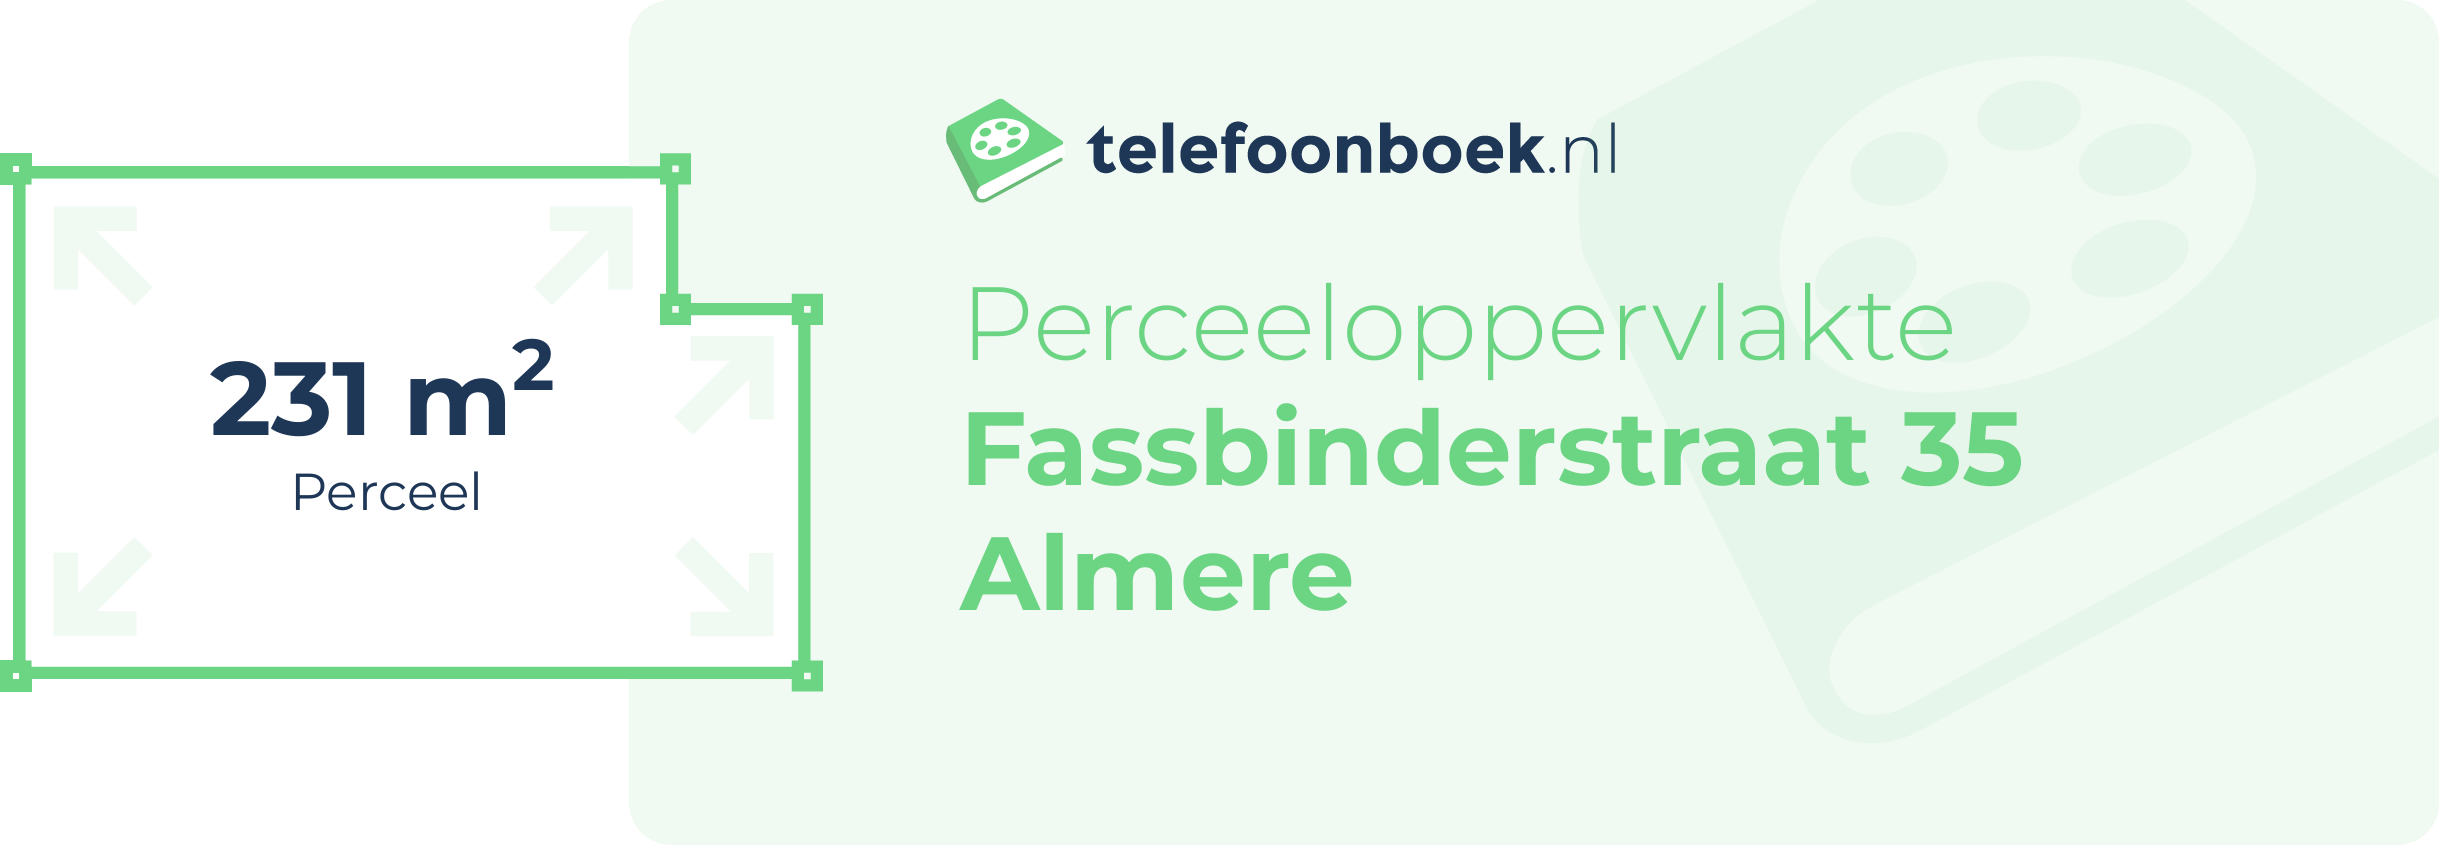 Perceeloppervlakte Fassbinderstraat 35 Almere